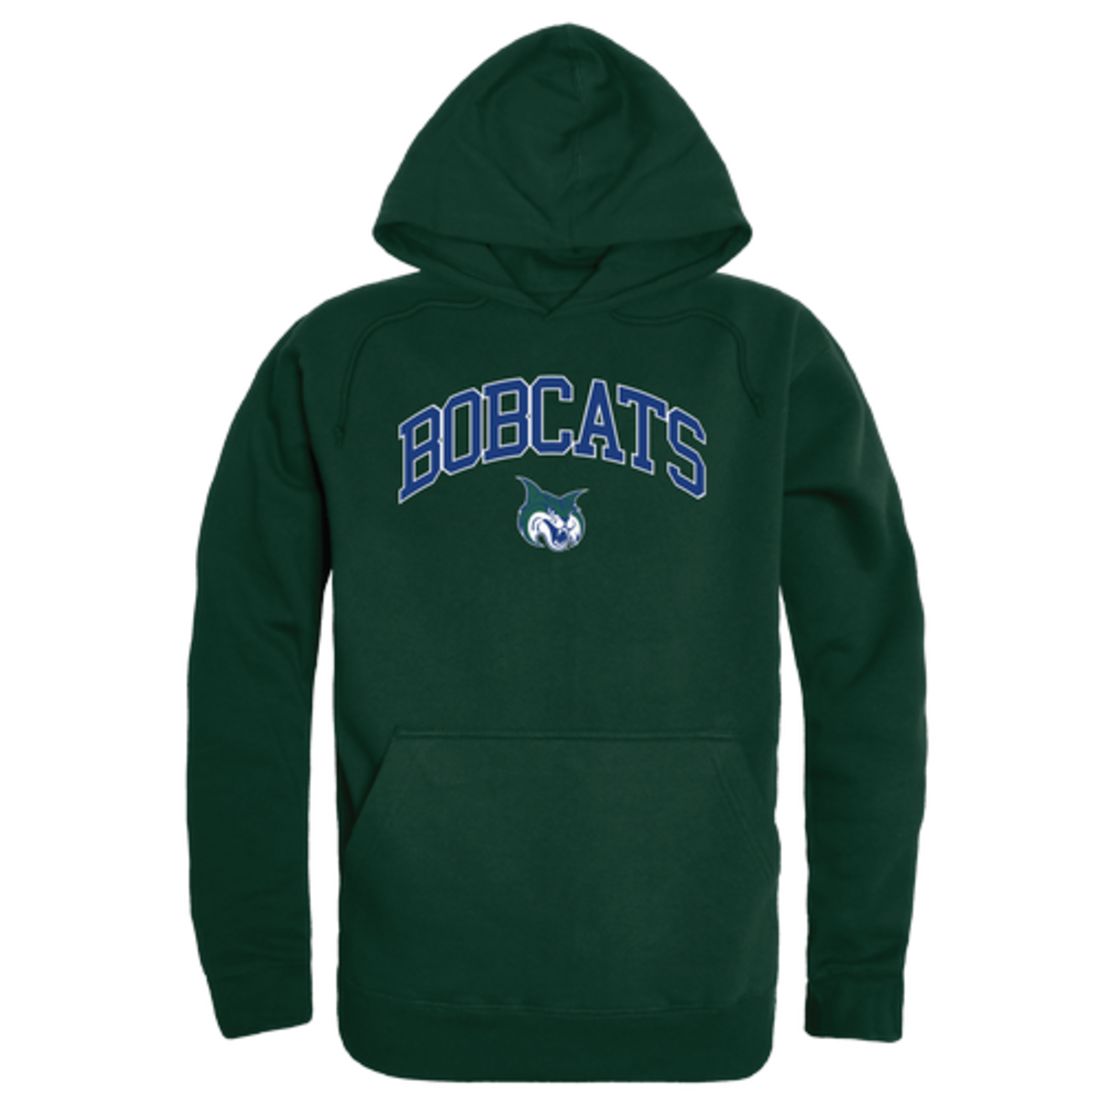 Georgia-College-and-State-University-Bobcats-Campus-Fleece-Hoodie-Sweatshirts